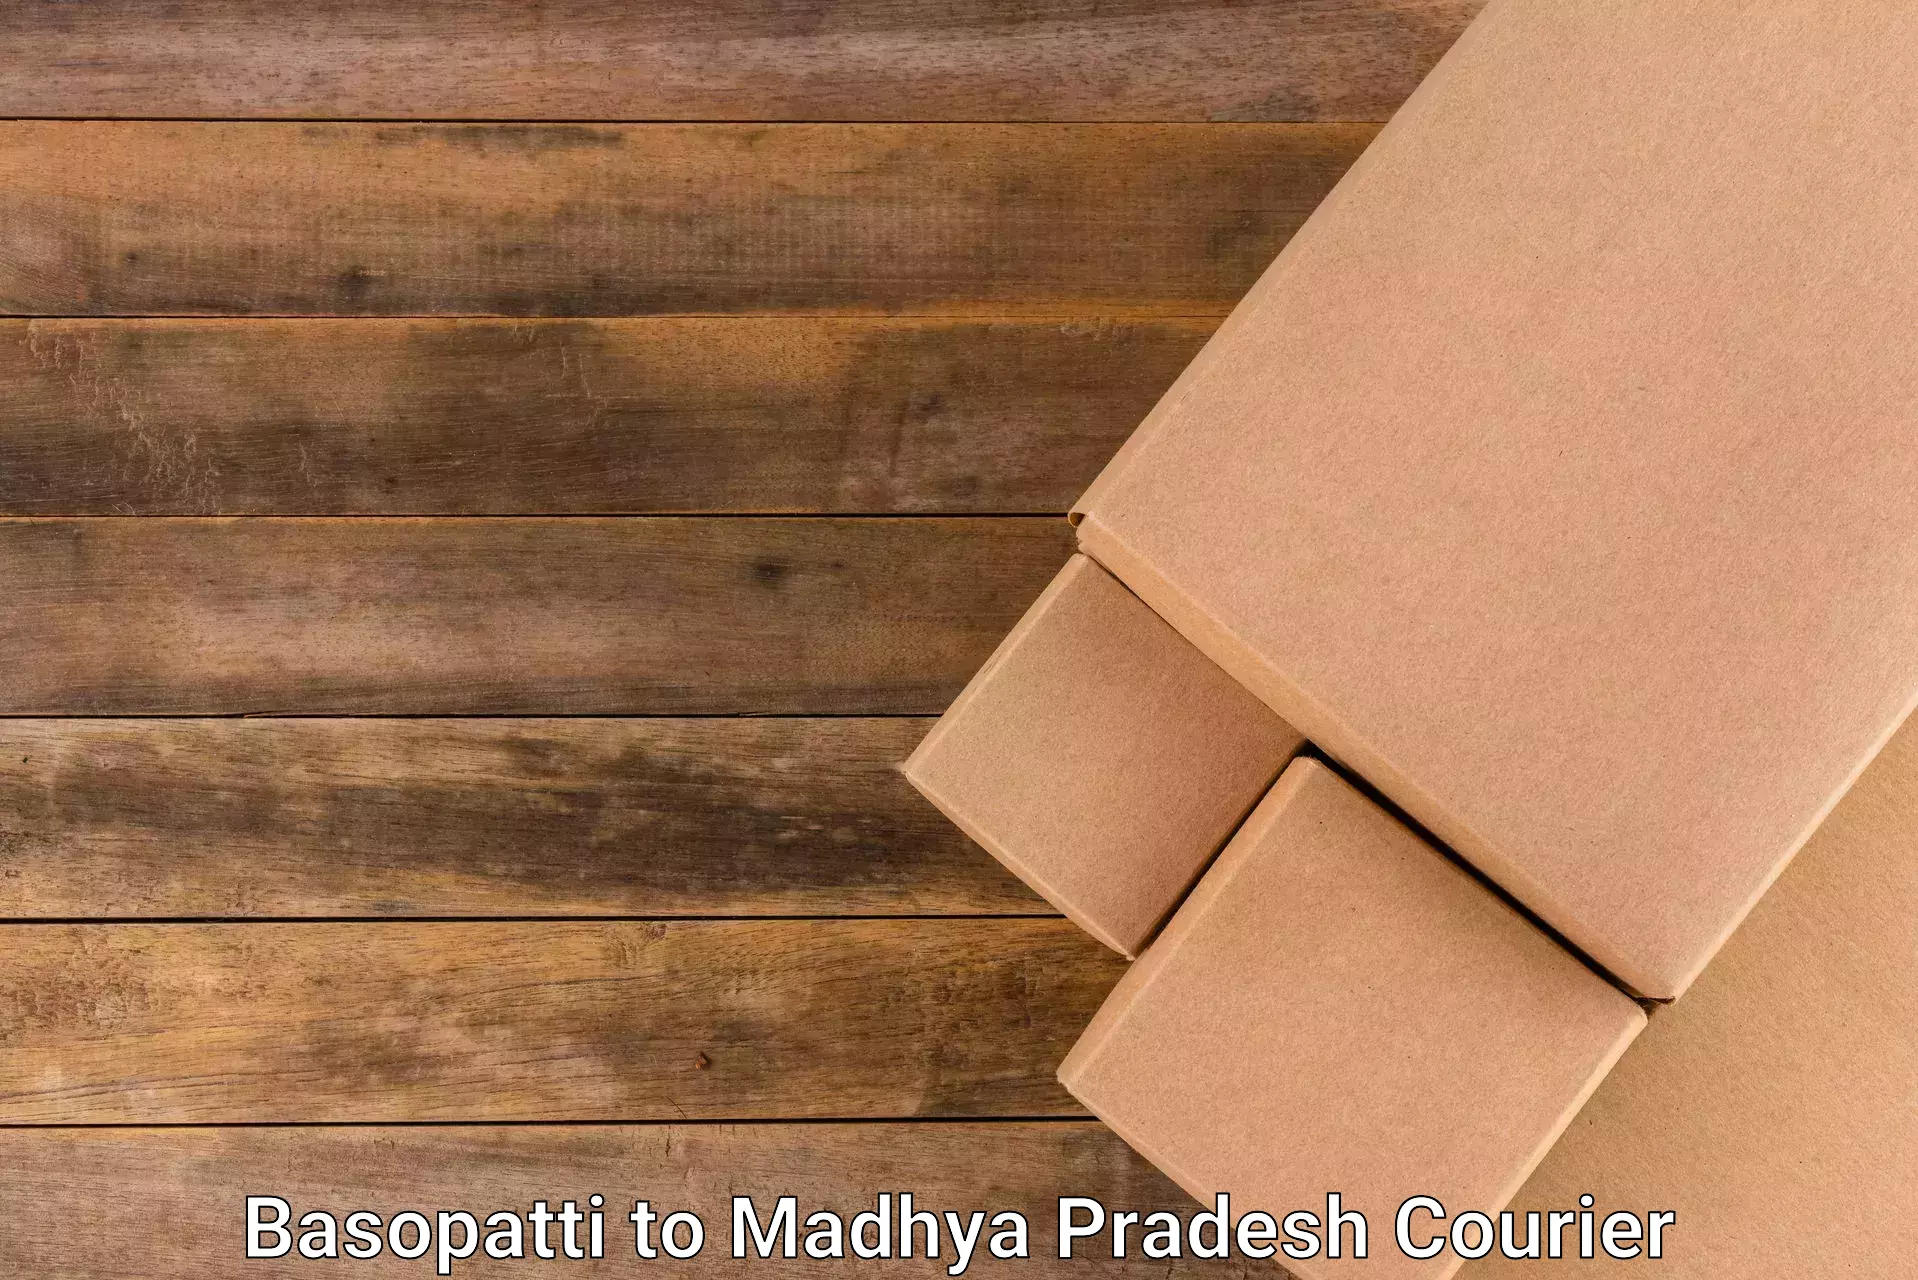 Professional courier handling Basopatti to Dhar